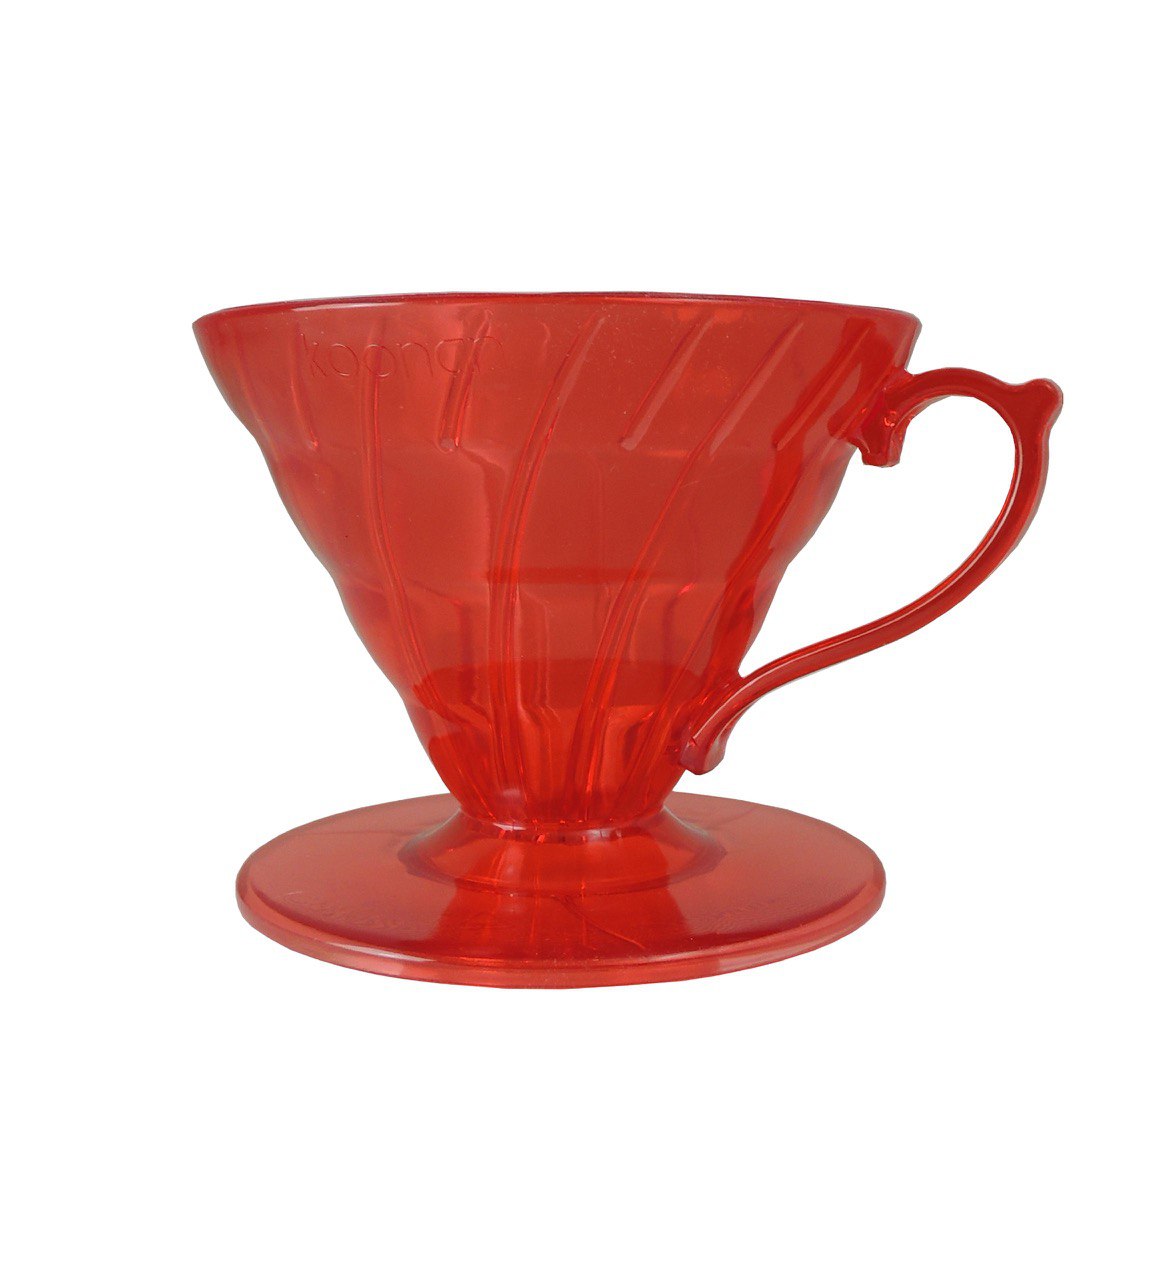 Ябодр-VD-02-R. Воронка пластиковая красная 02 размера. 1-4 чашки